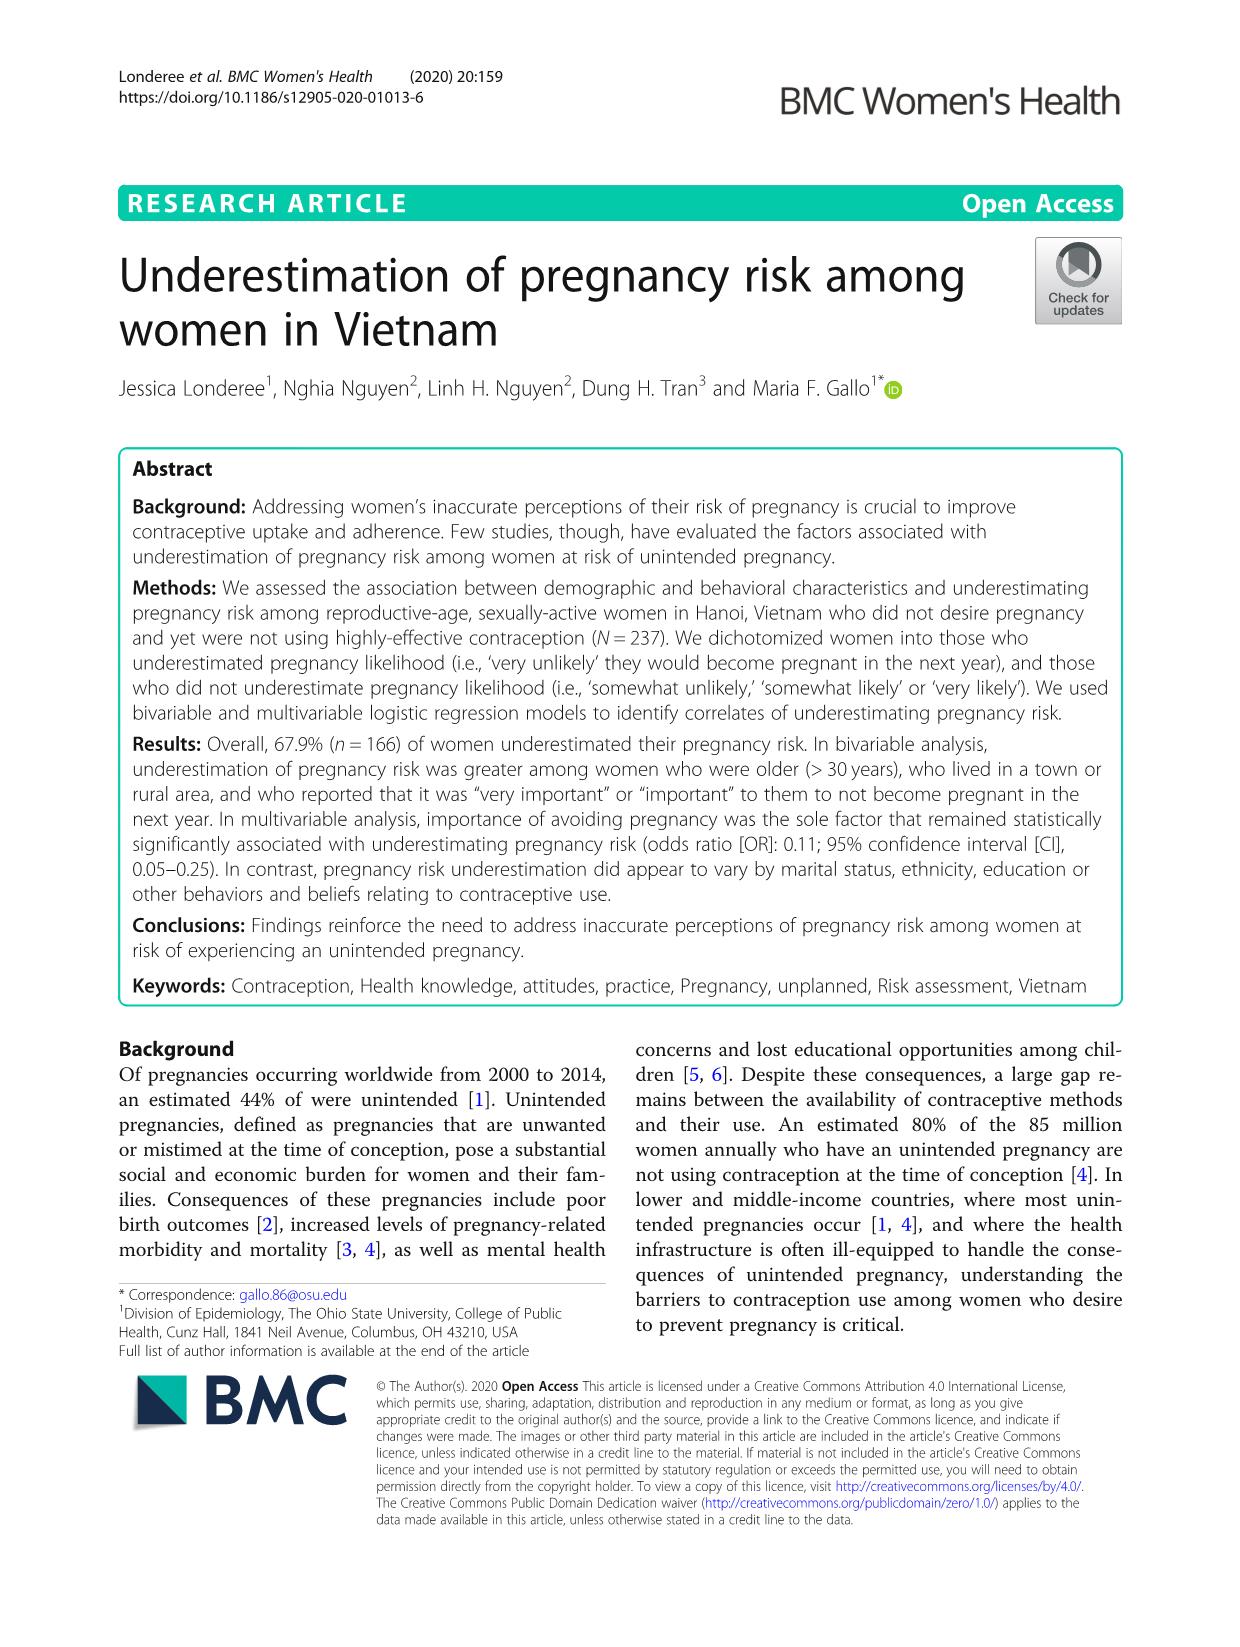 Underestimation of pregnancy risk among women in Viet Nam trang 1